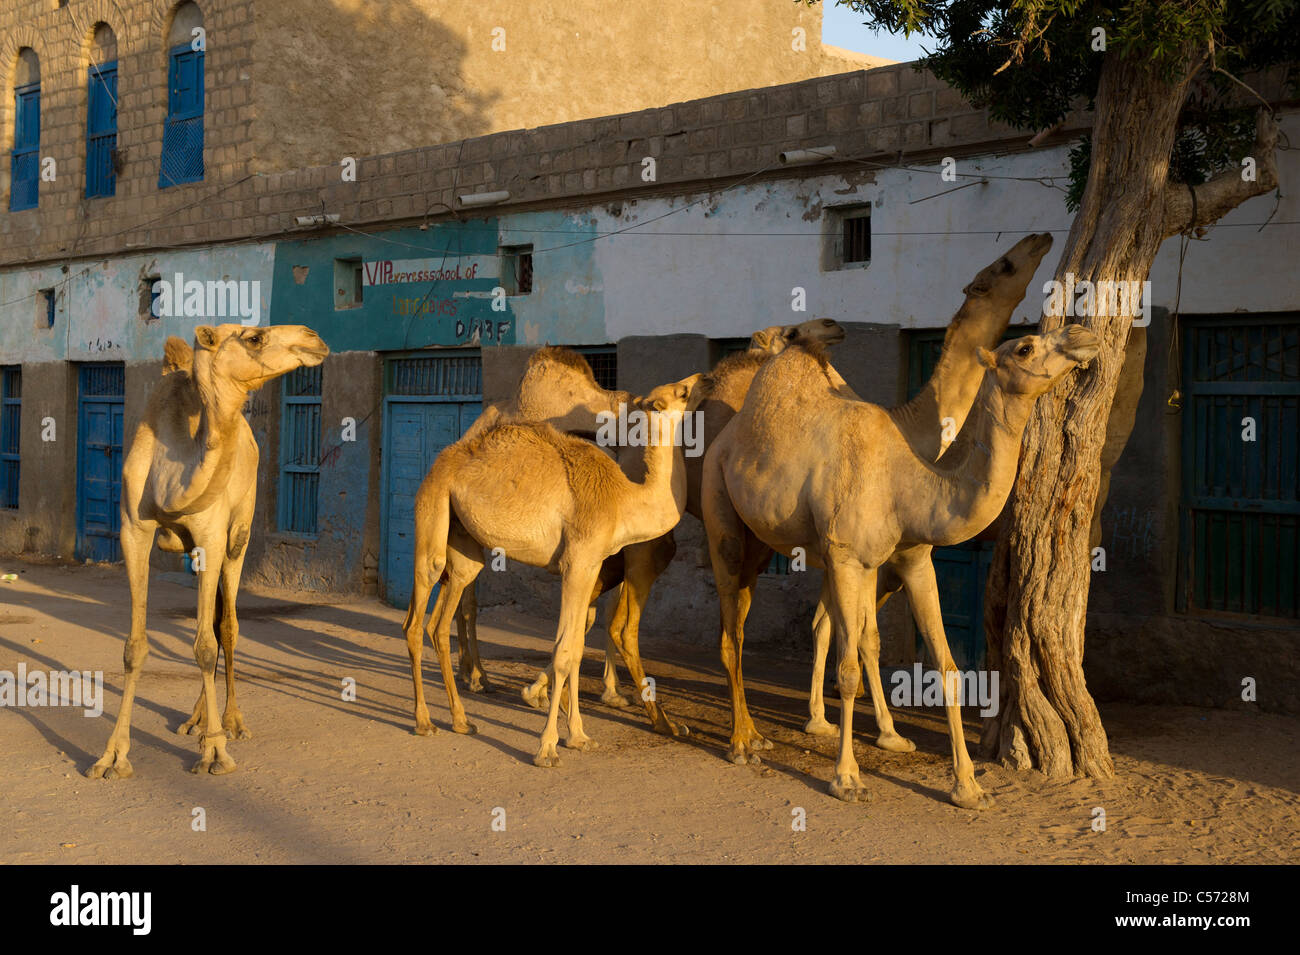 Camels walking in the street, Berbera, Somaliland, Somalia Stock Photo